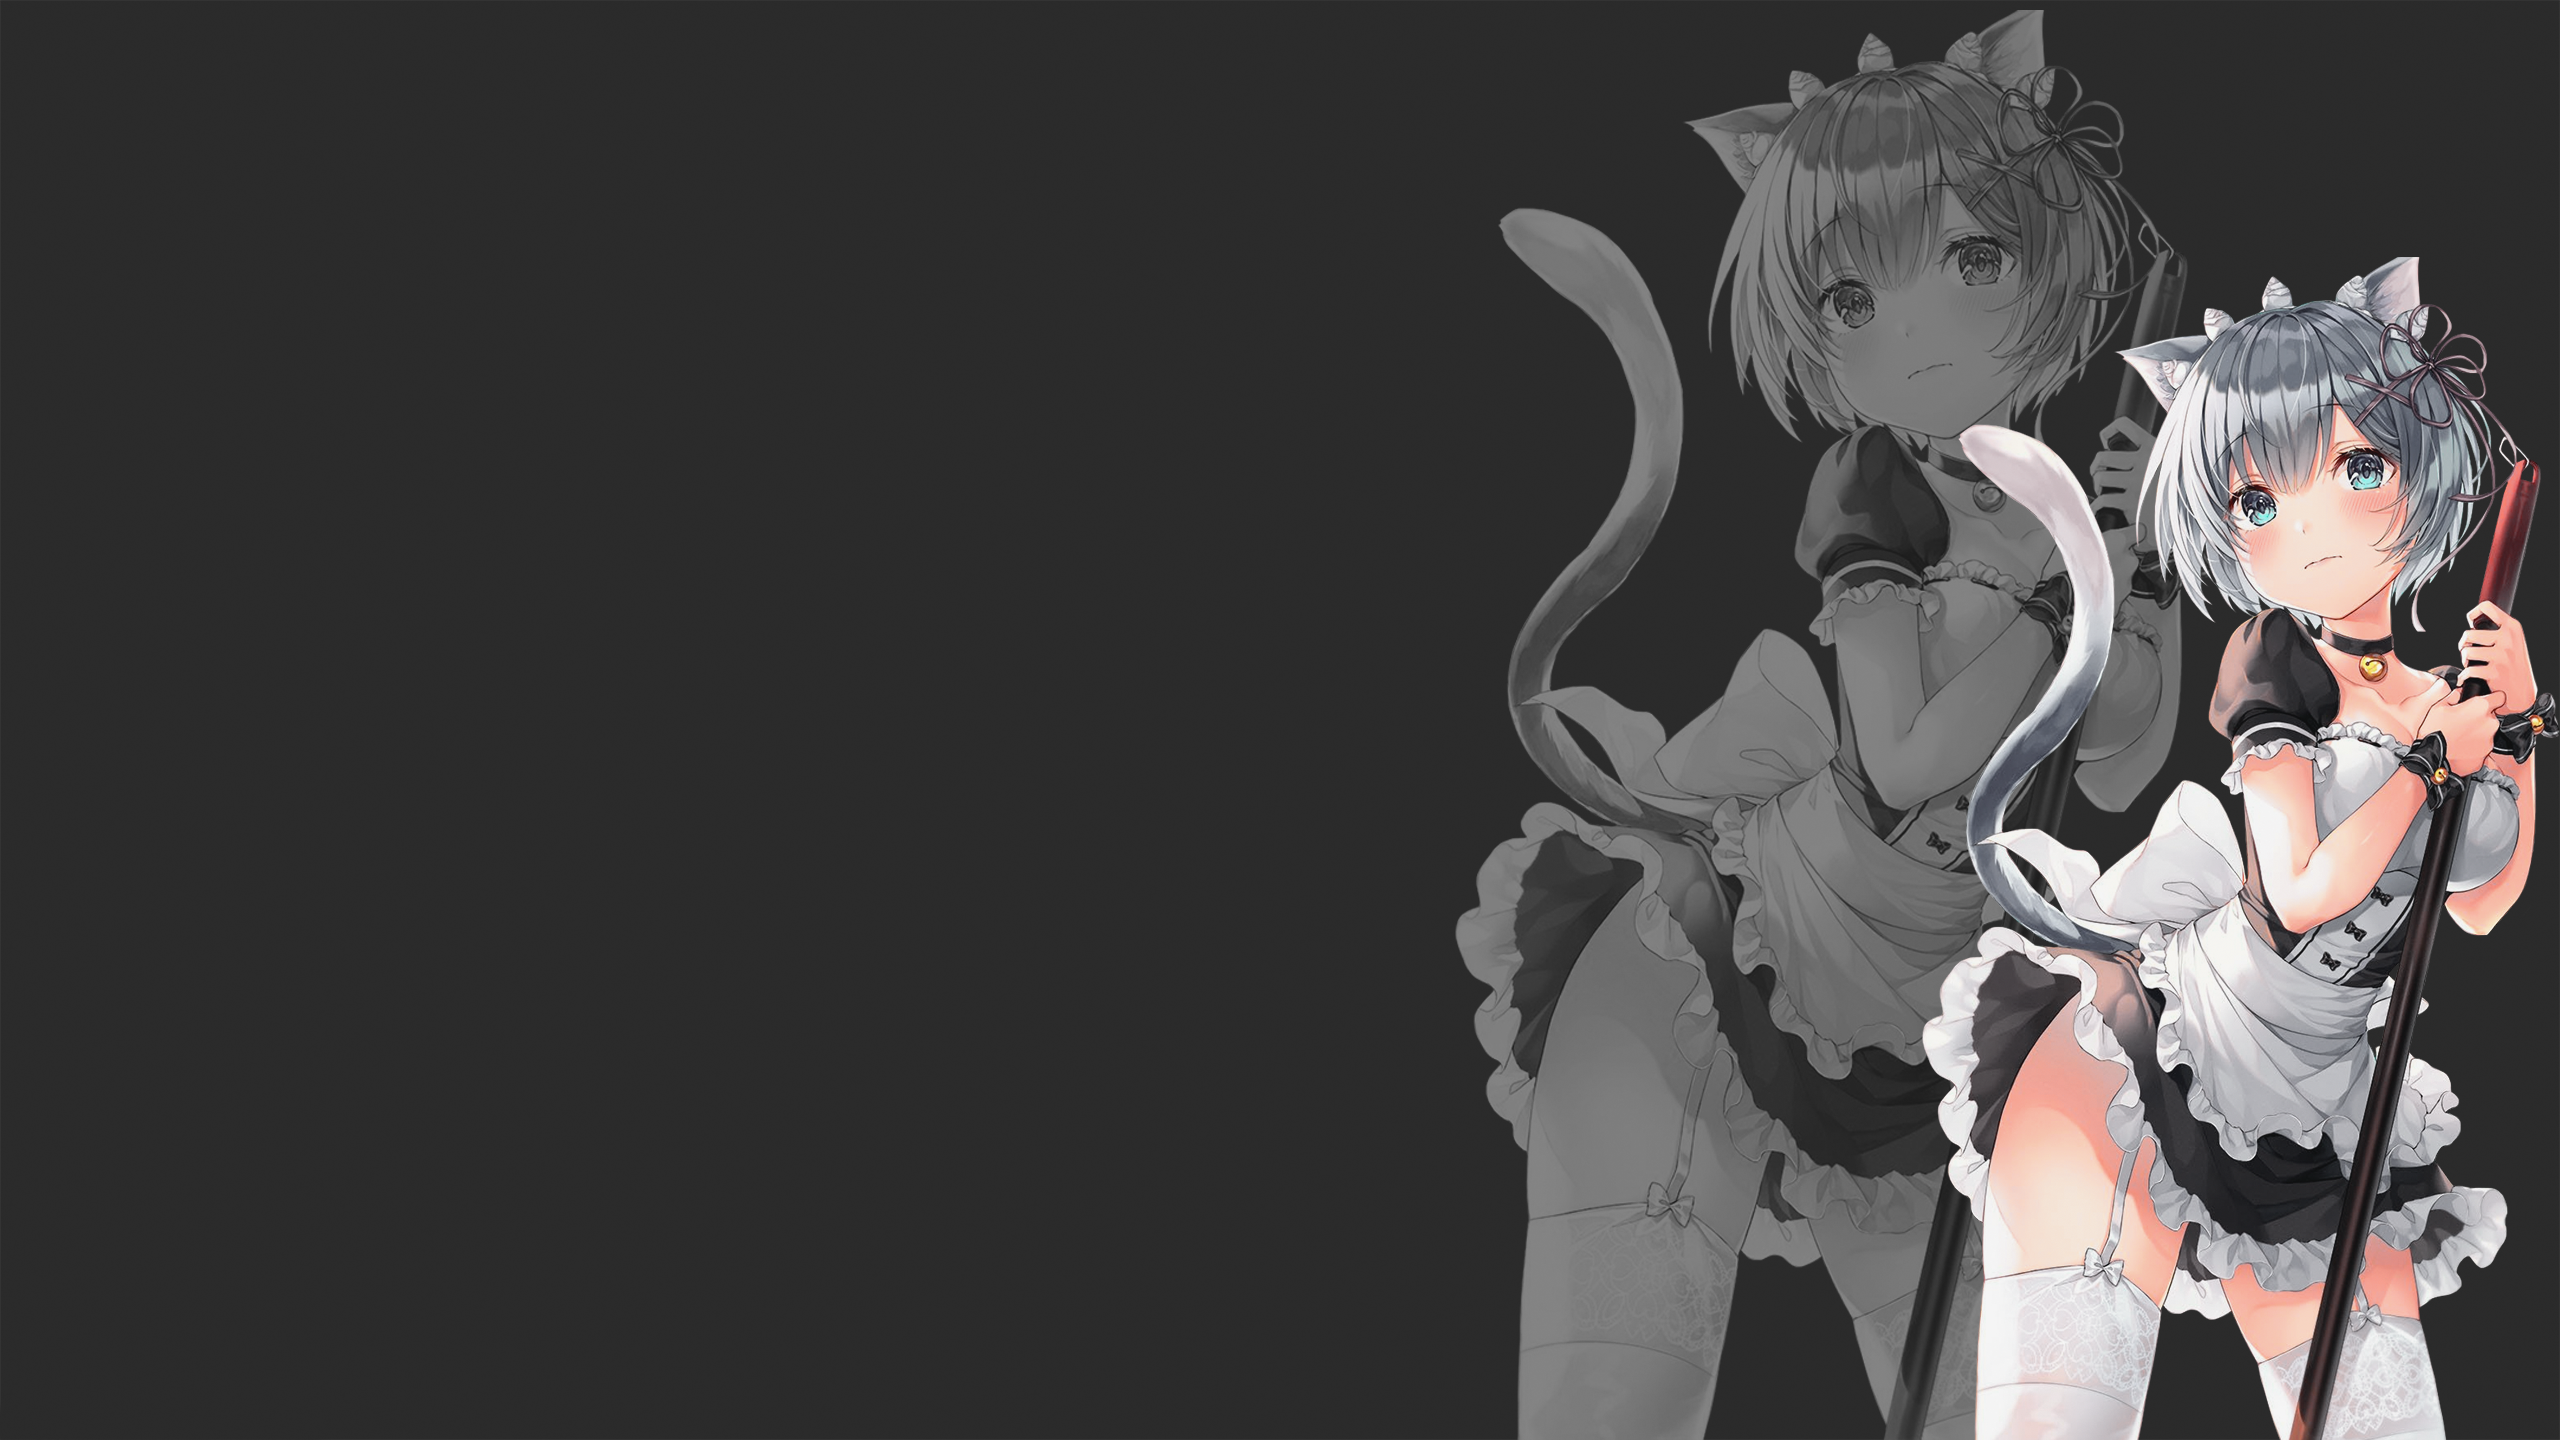 Anime 2560x1440 anime anime girls maid cat girl cat ears cat tail dark background maid outfit garter belt stockings